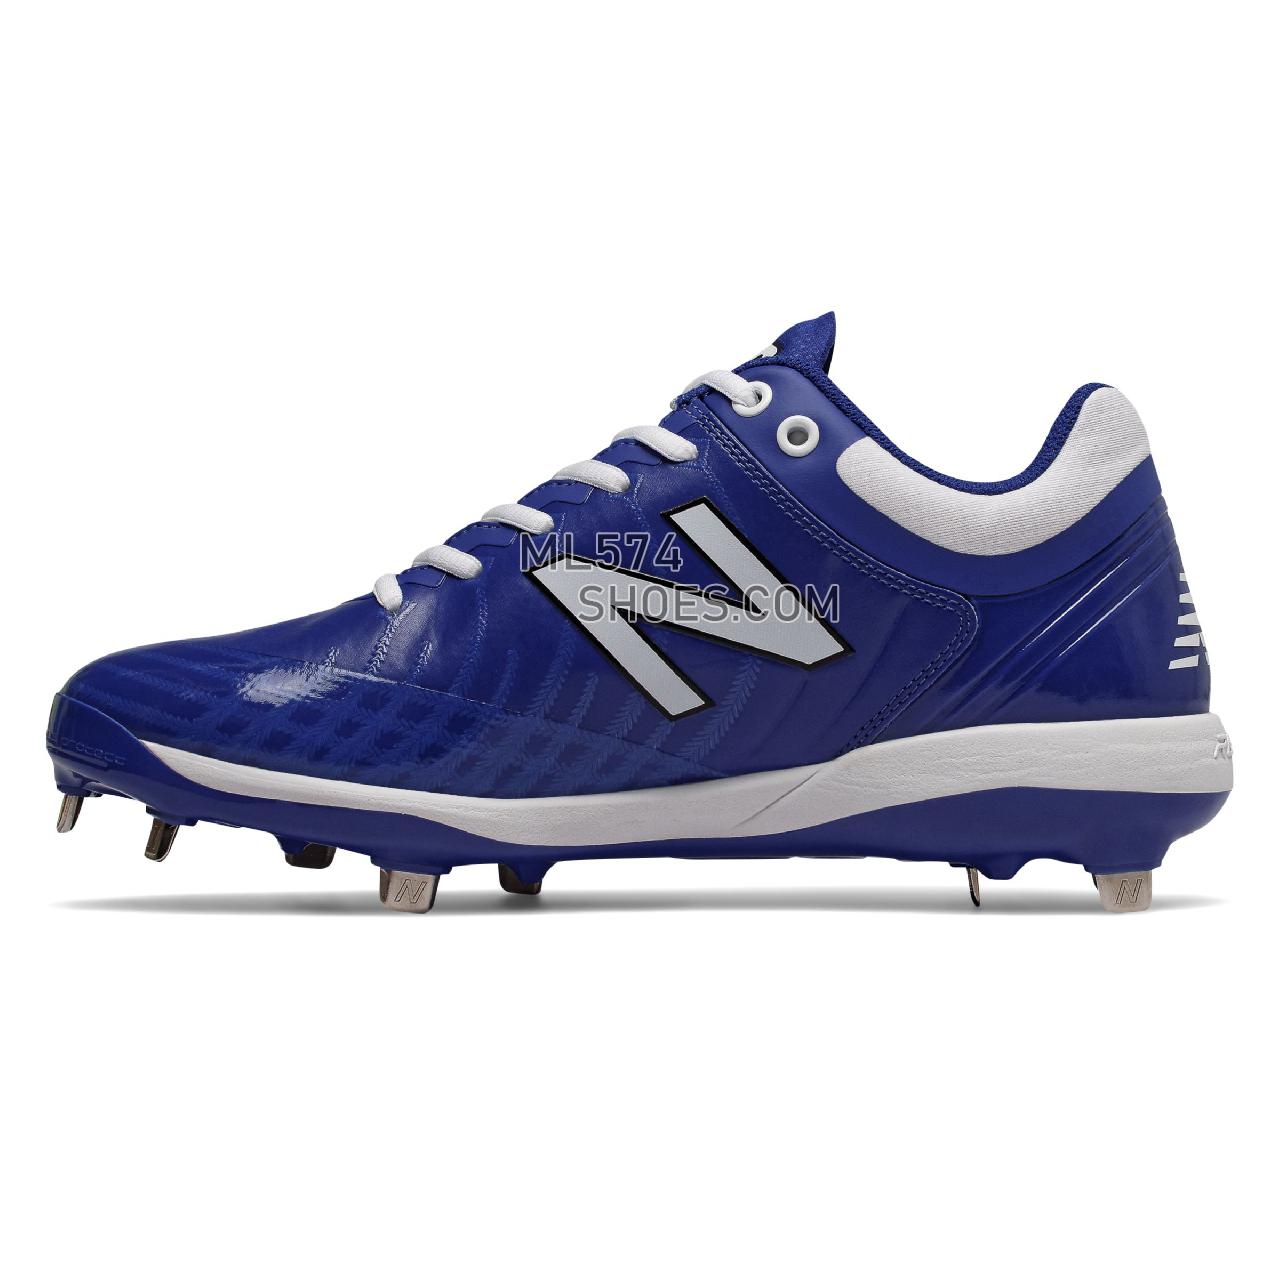 New Balance 4040v5 Metal - Men's Baseball Turf - Royal Blue with White - L4040TB5